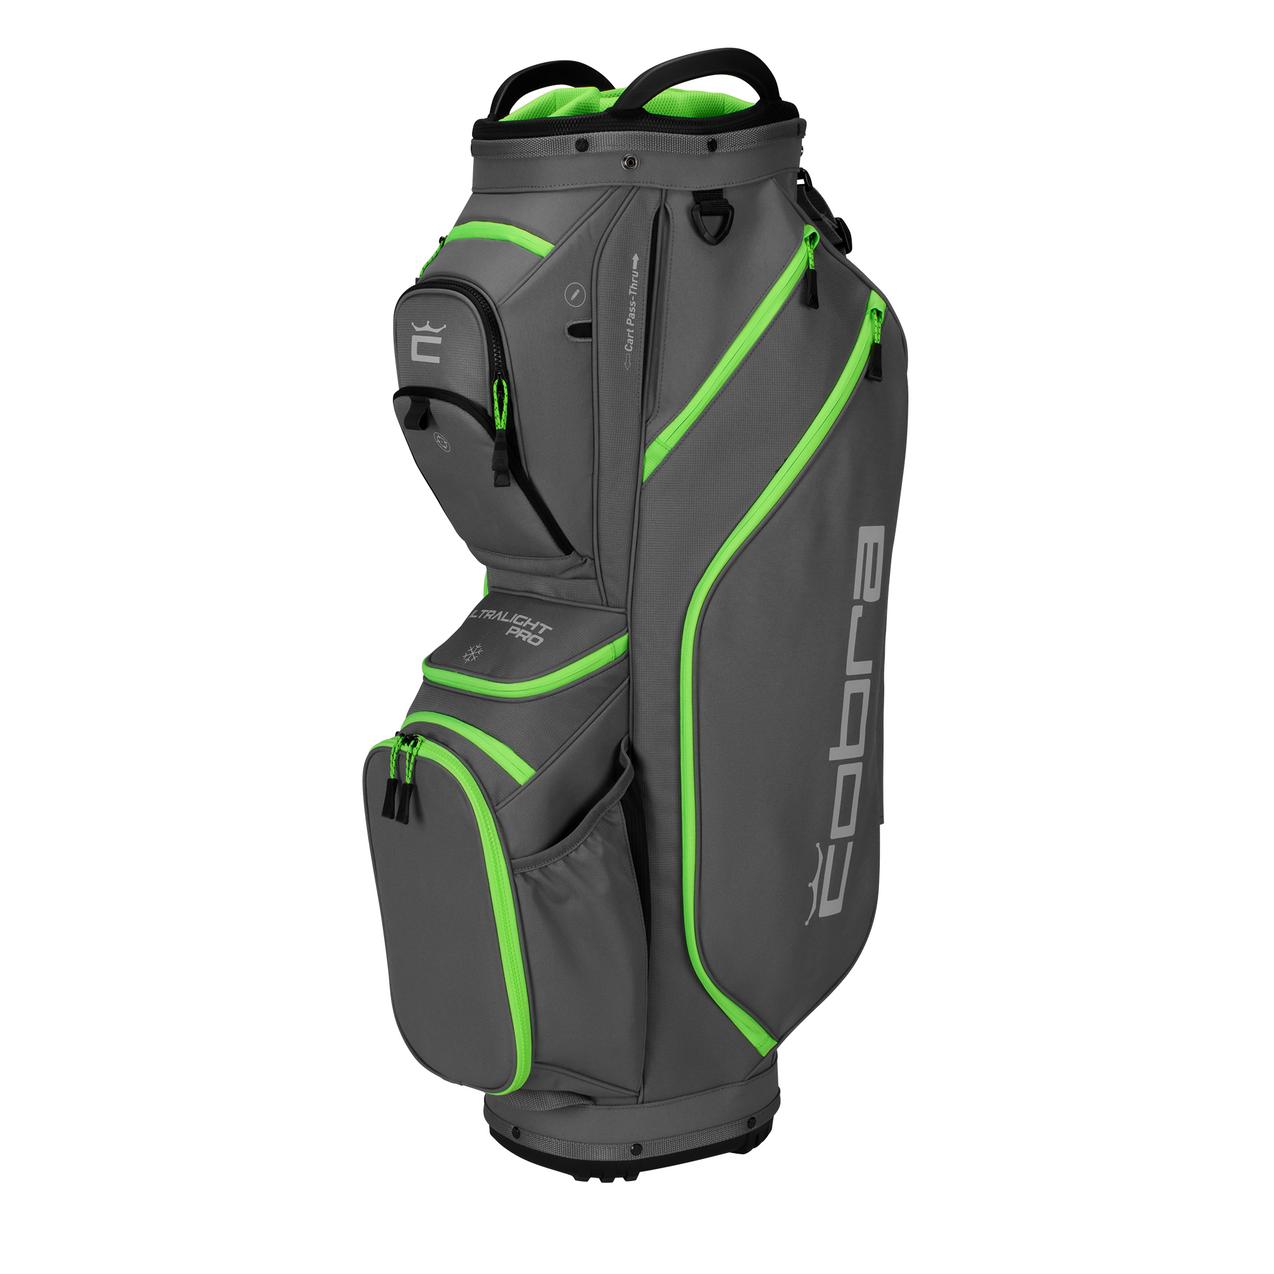 NEW Cobra Ultralight Pro Cart Golf Bag